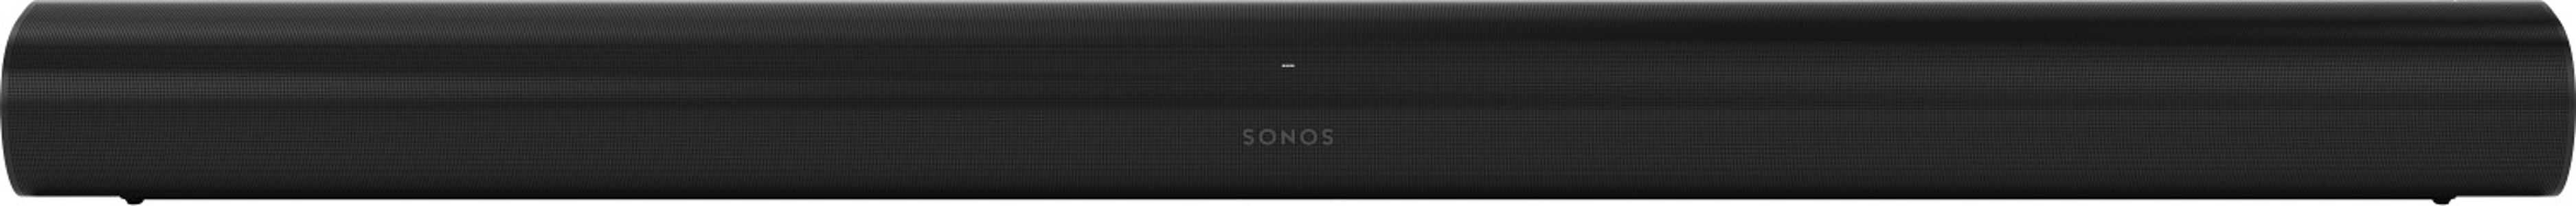 Sonos Arc Black